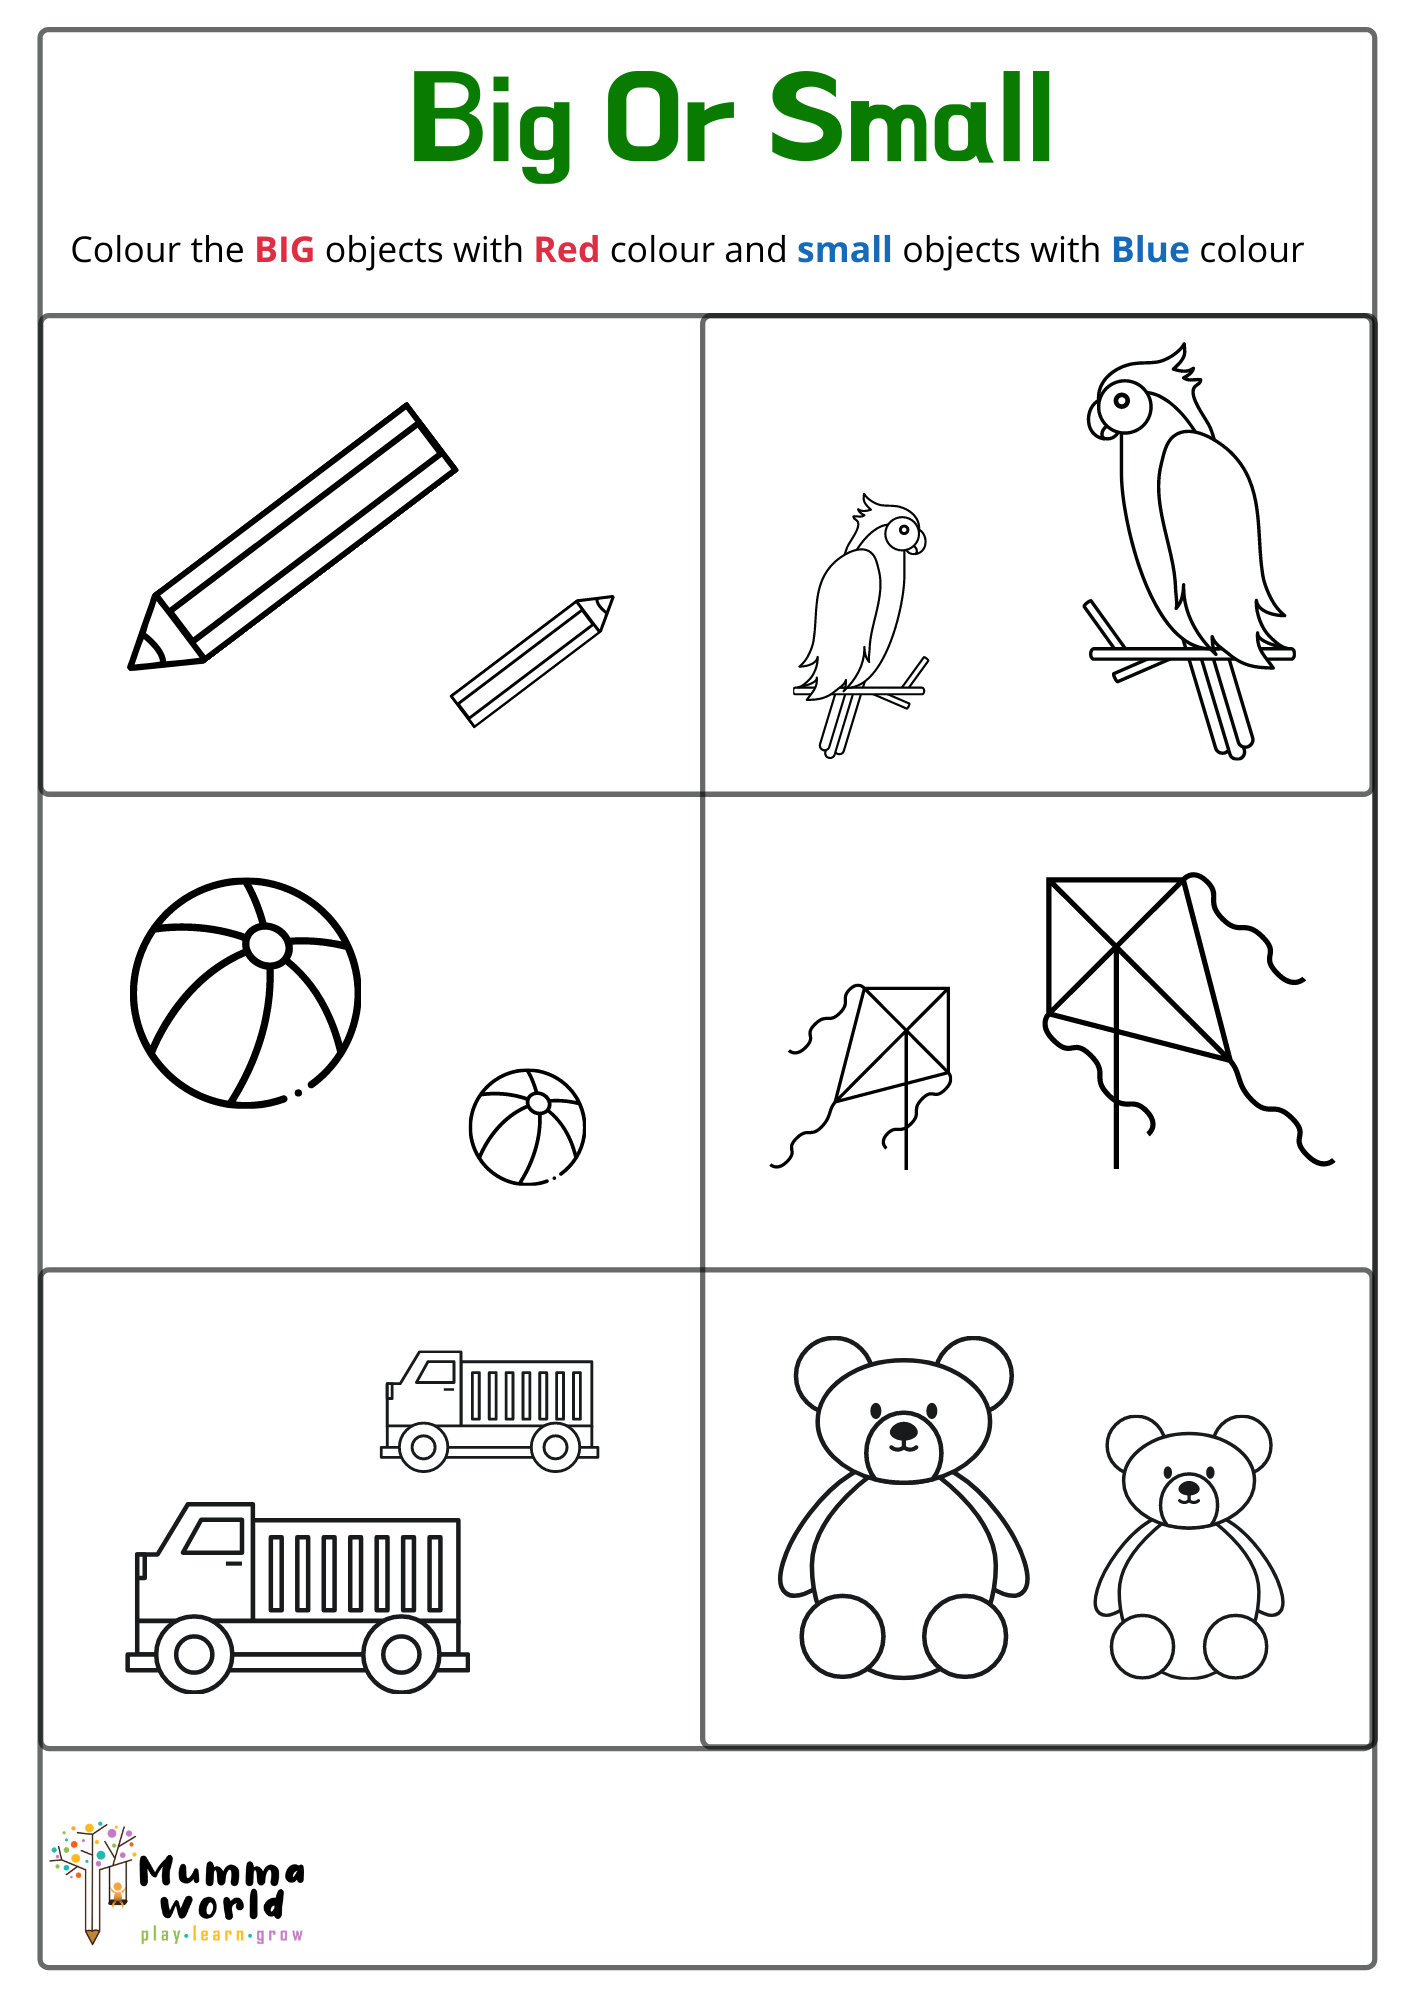 Big And Small Worksheet Colouring Page Preschooler Worksheet Mummaworld Com